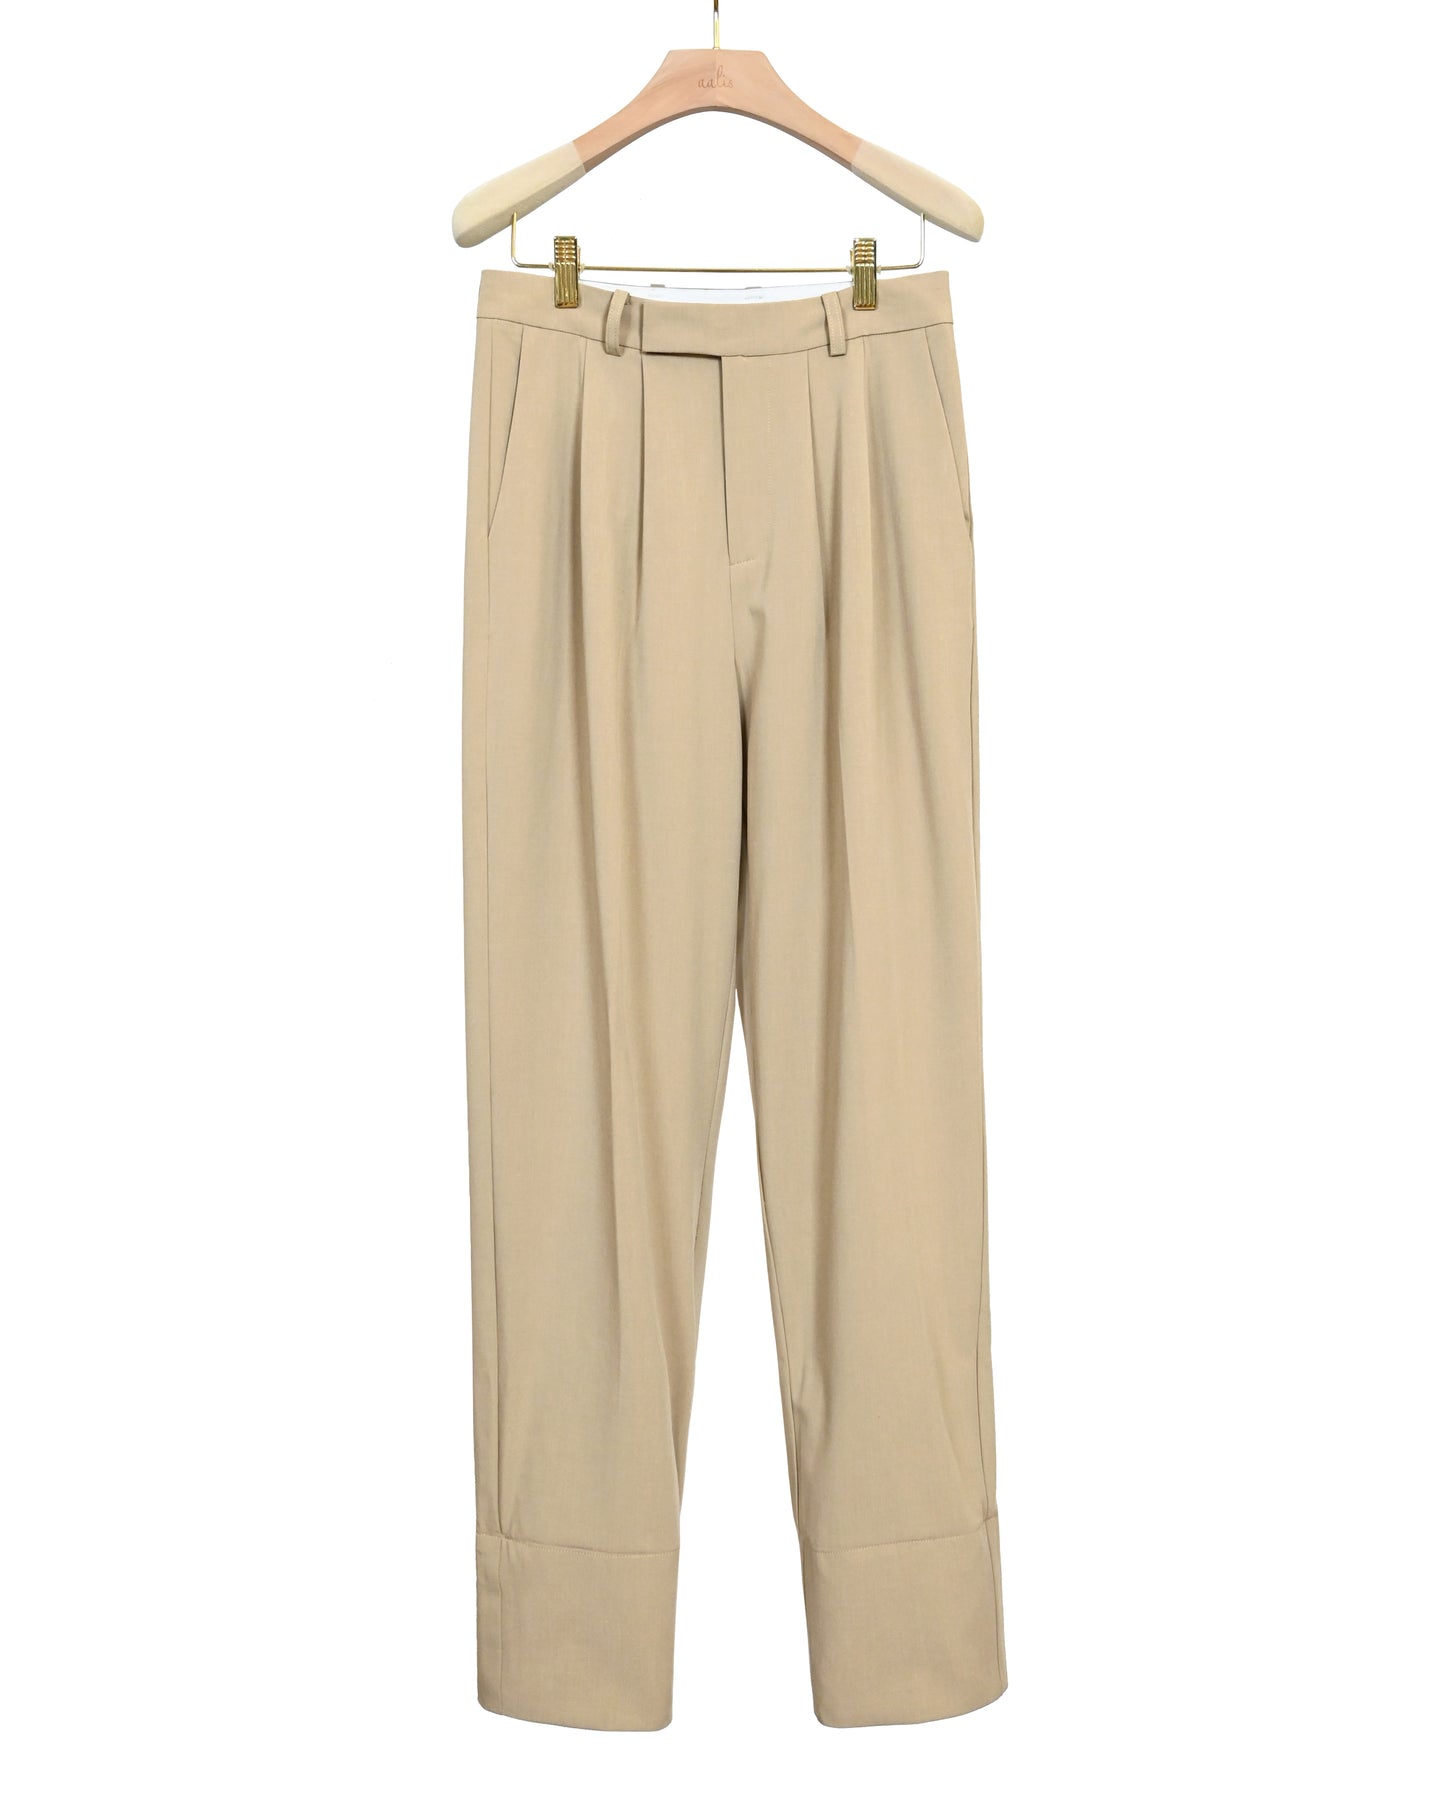 aalis LIZ white cuff suiting pants (Light beige)